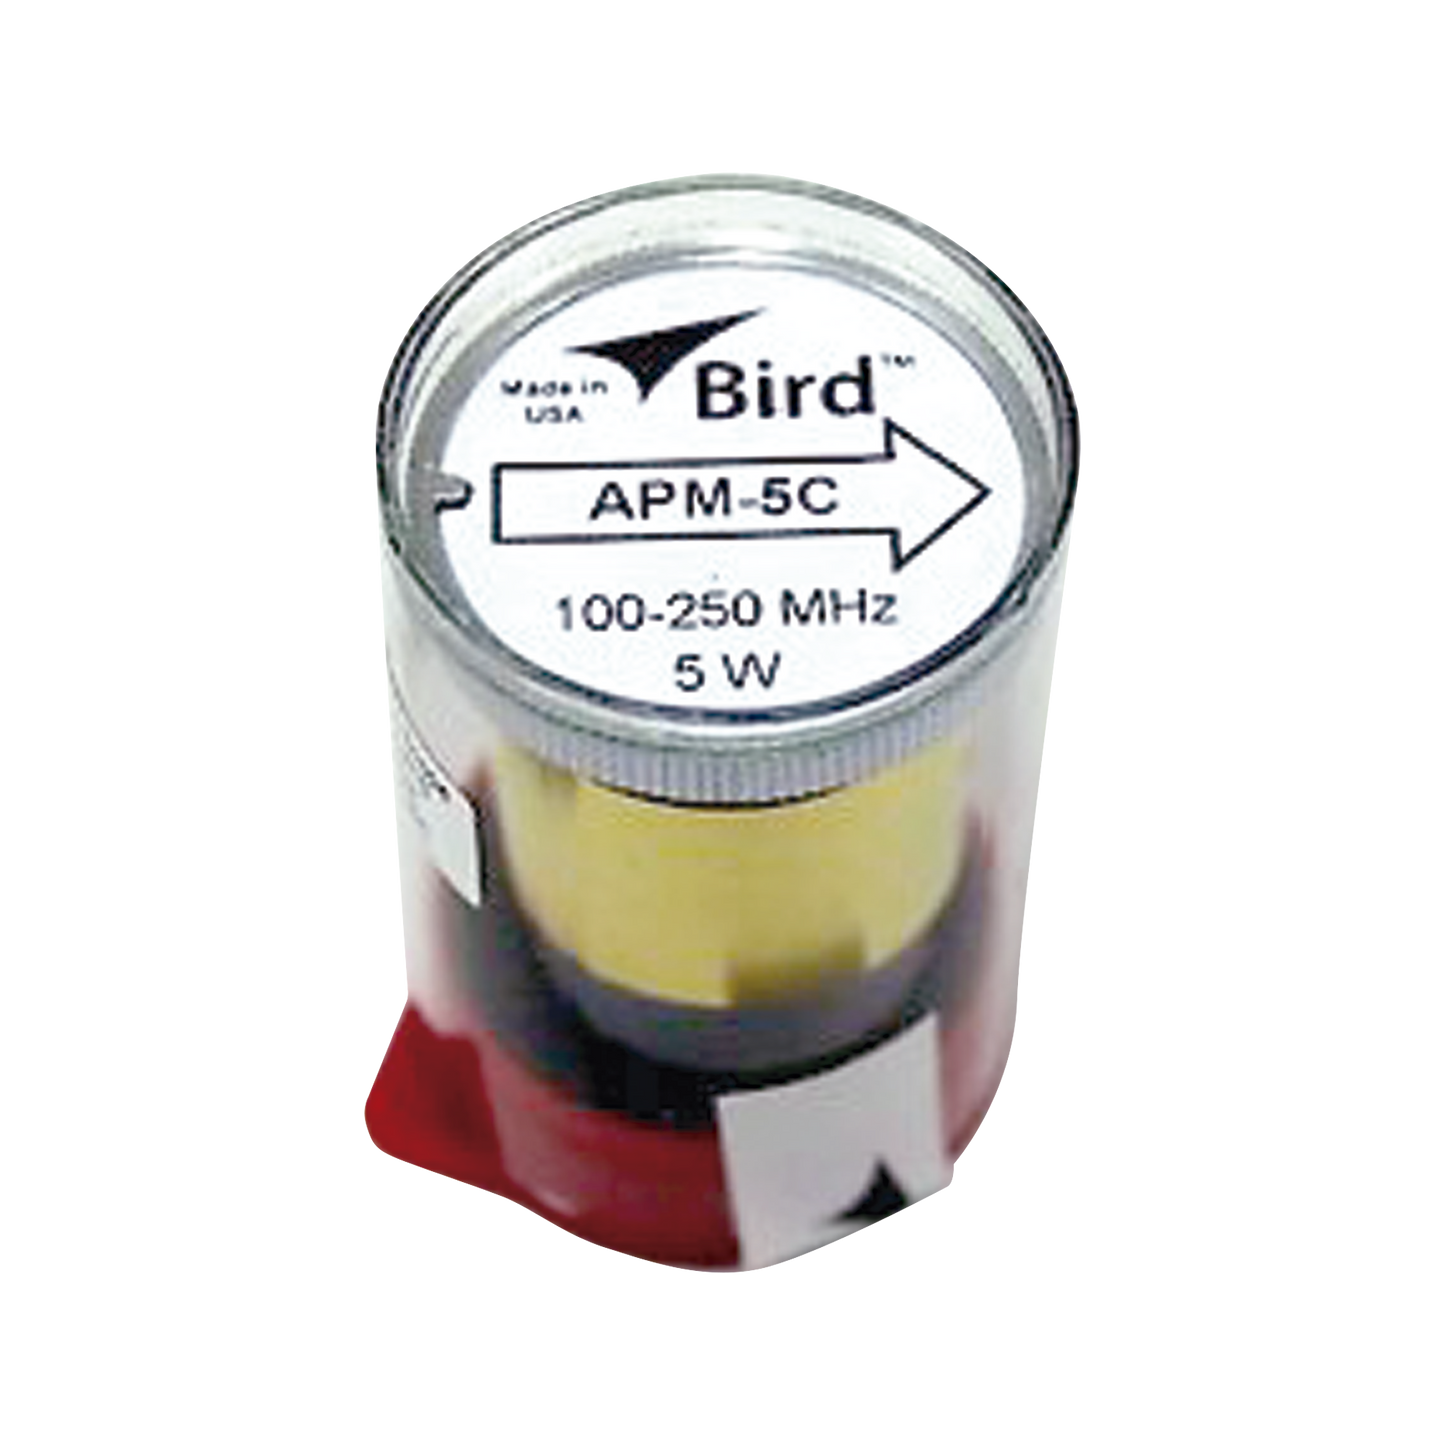 Elemento para Wattmetro BIRD APM-16, 100-250 MHz, 5 Watt.